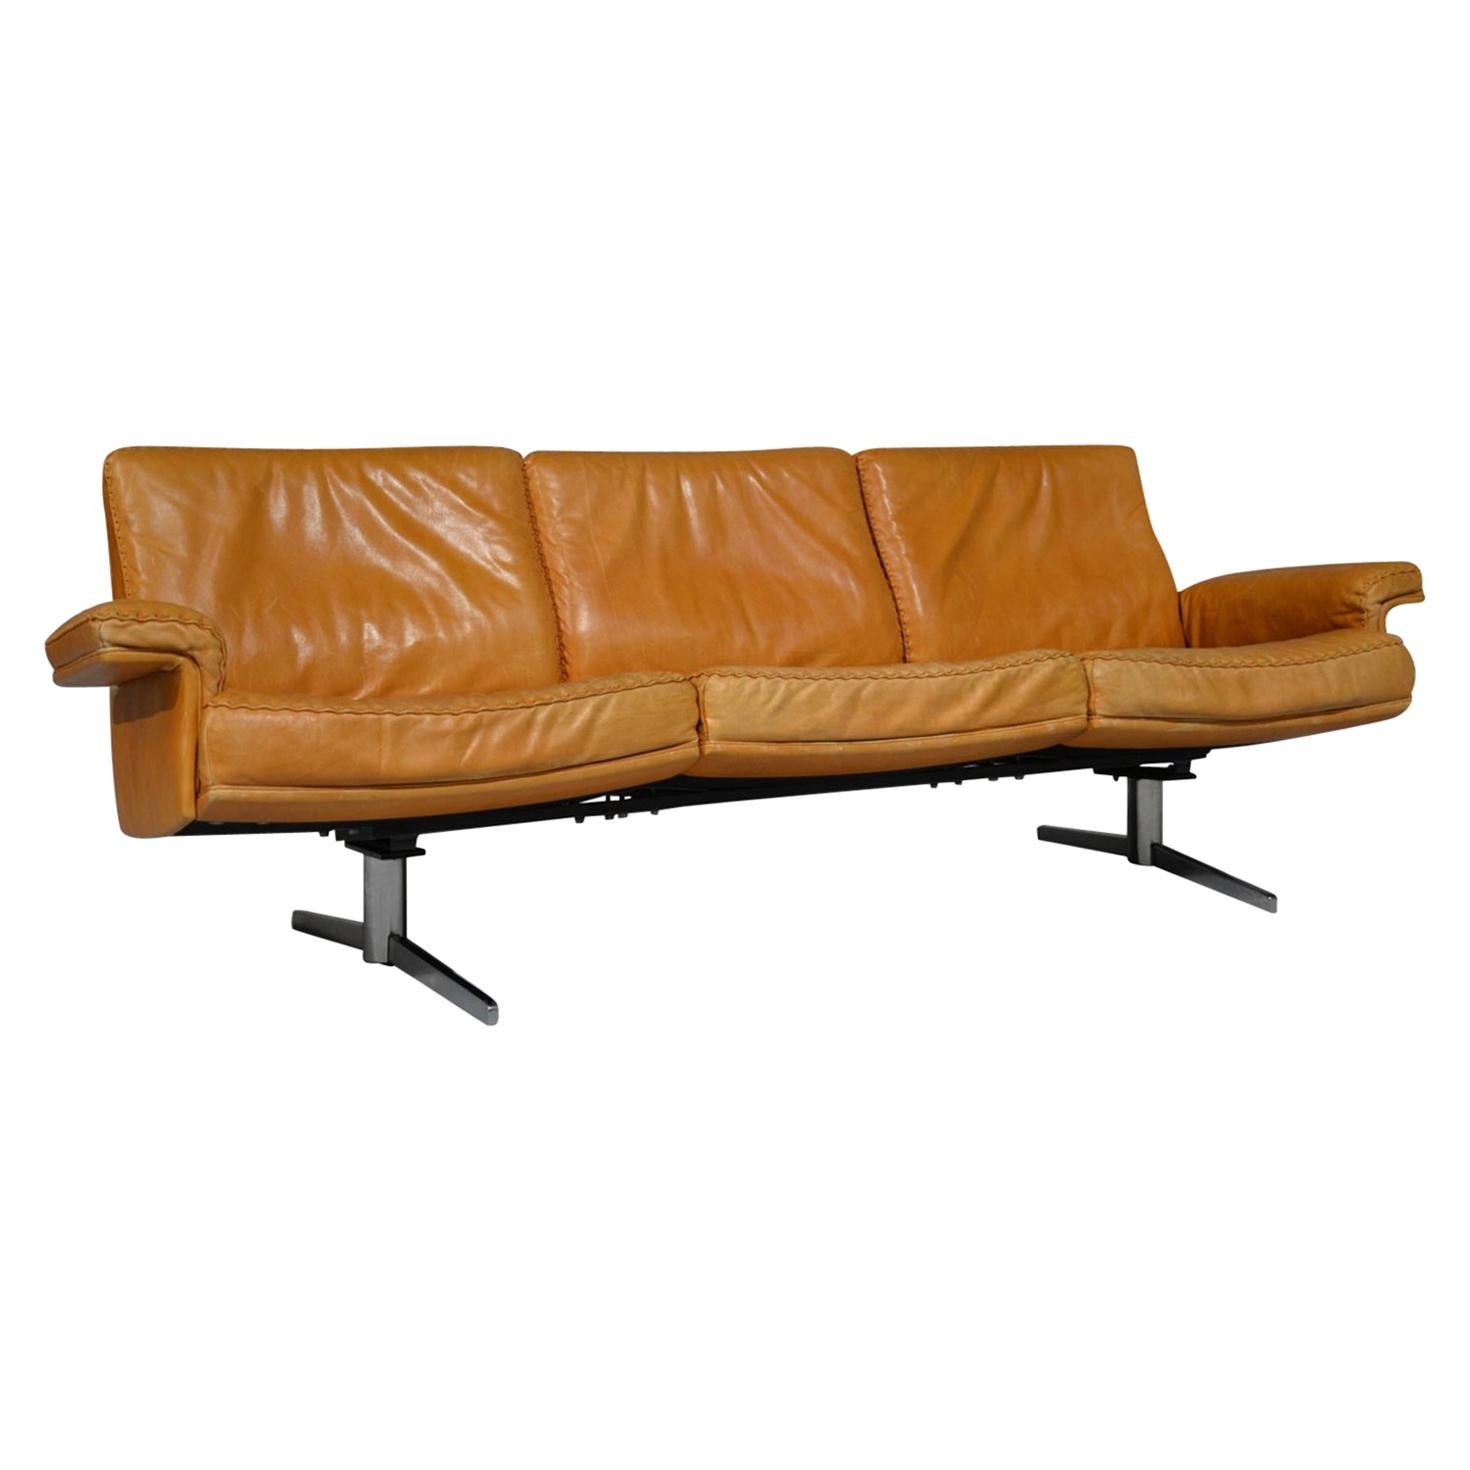 Vintage De Sede DS 35 Leather Three-Seat Sofa, Switzerland, 1960s For Sale